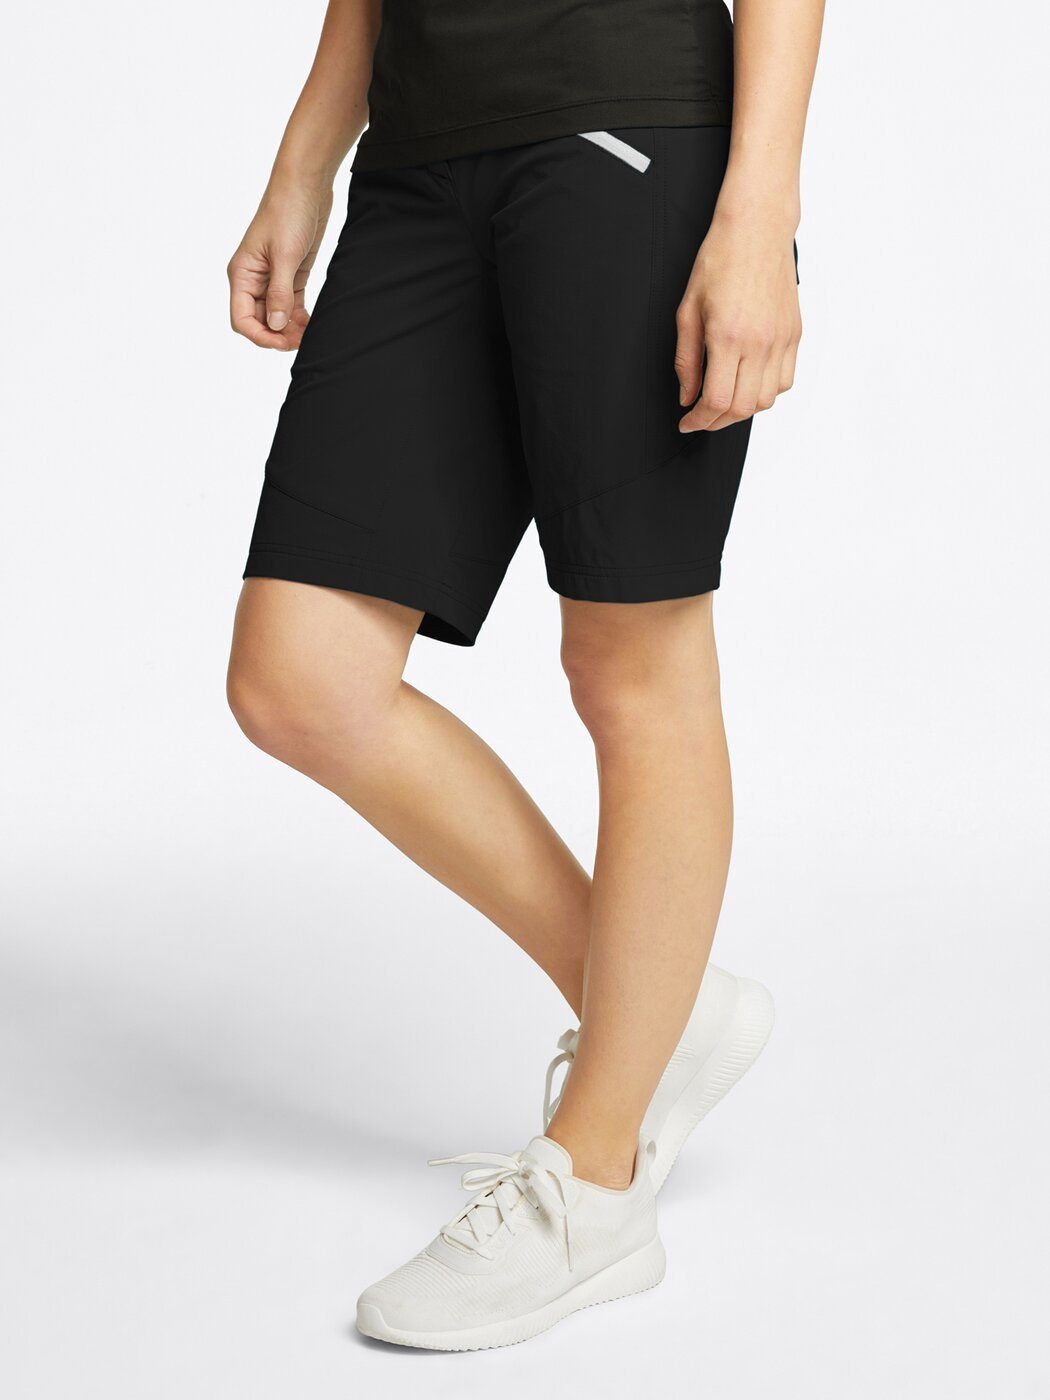 Ziener NASITA black.white Shorts 1201 (shorts) X-Function lady